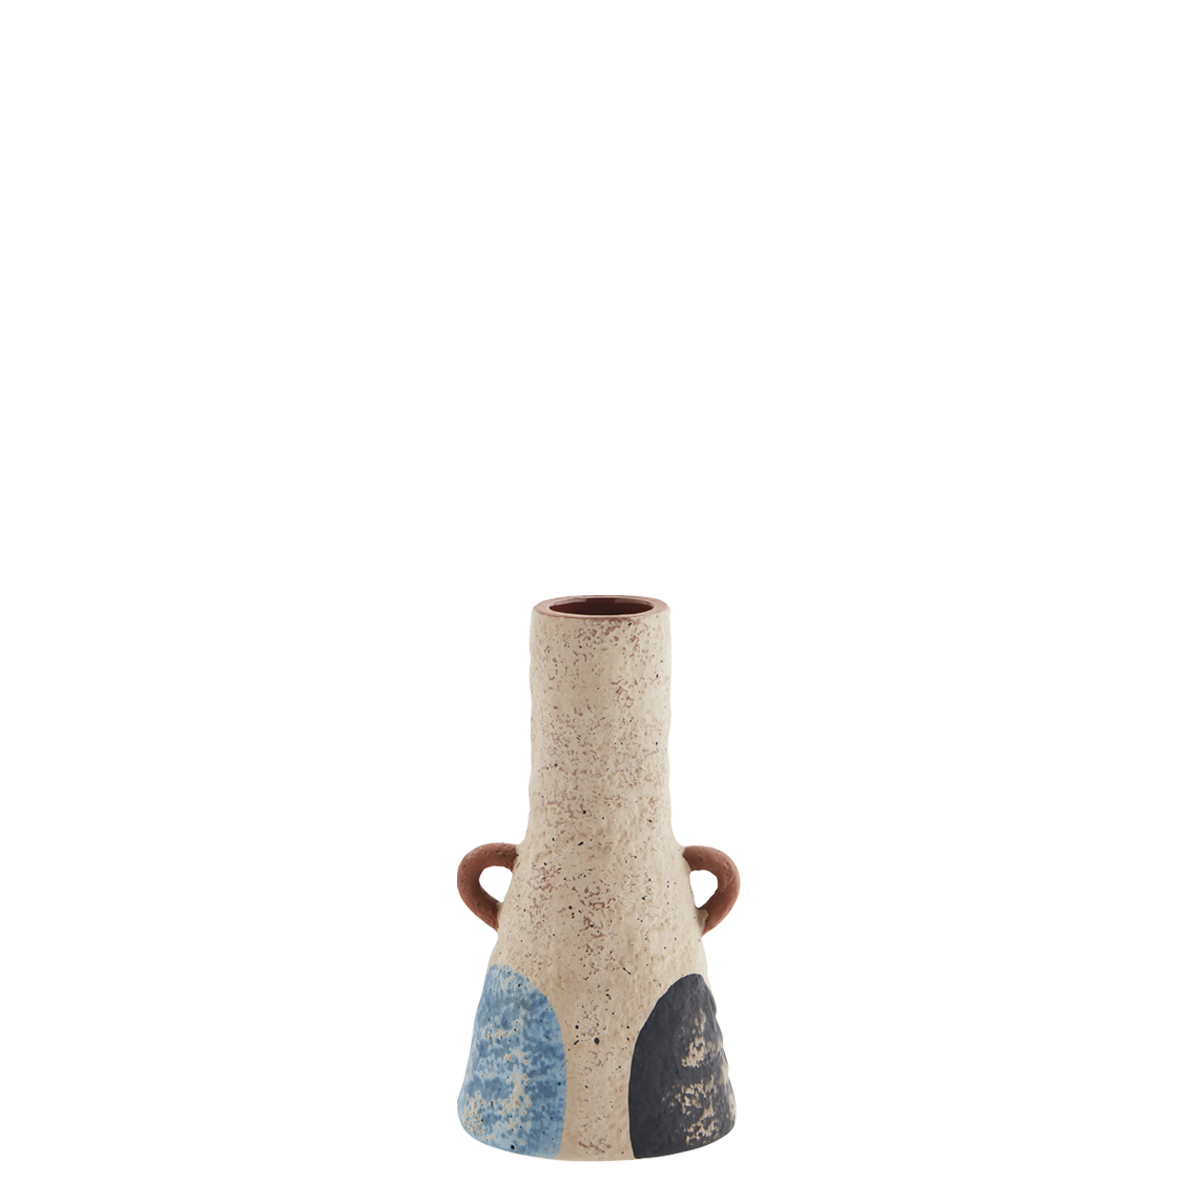 Hand painted terracotta vase w/ handles